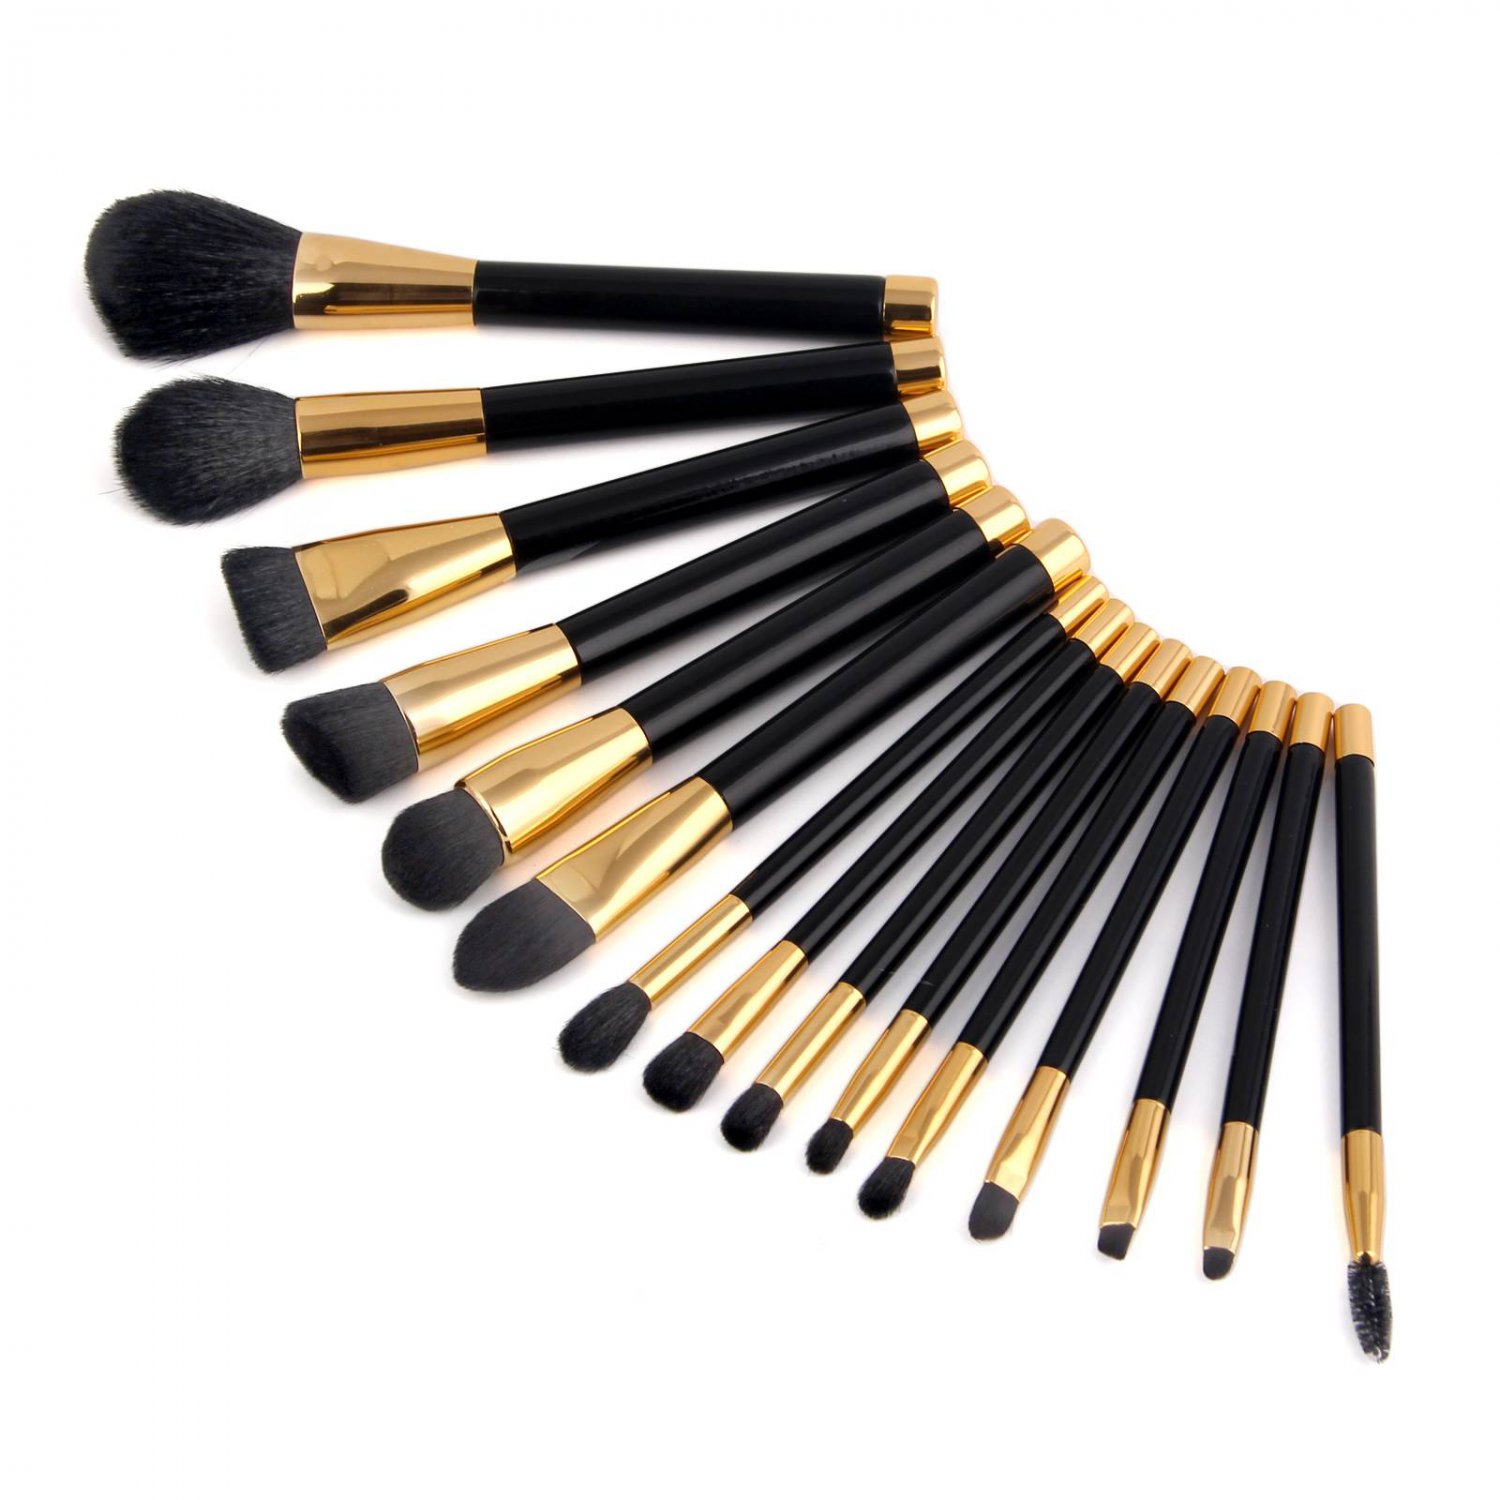 15pcs High-Grade Makeup Make Up Brush Sets Brush kit